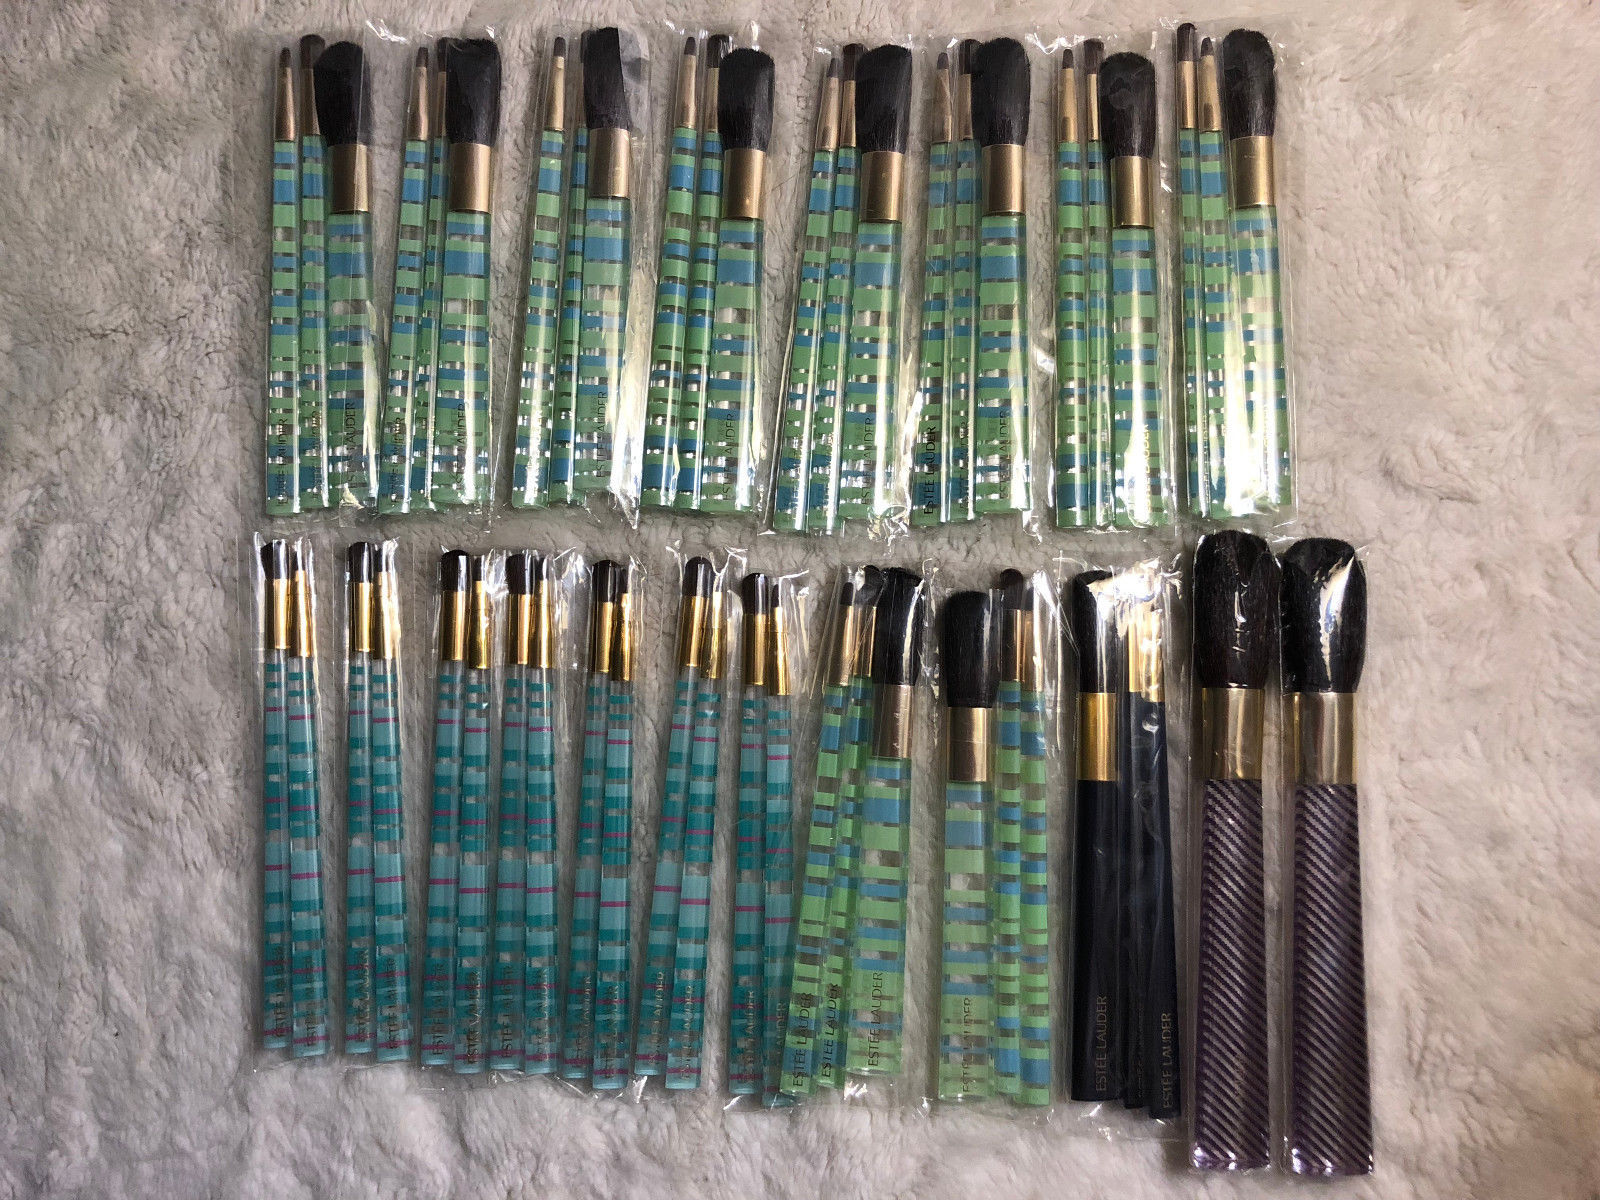 Estee Lauder Makeup Brush Set - $7.26 - $14.52